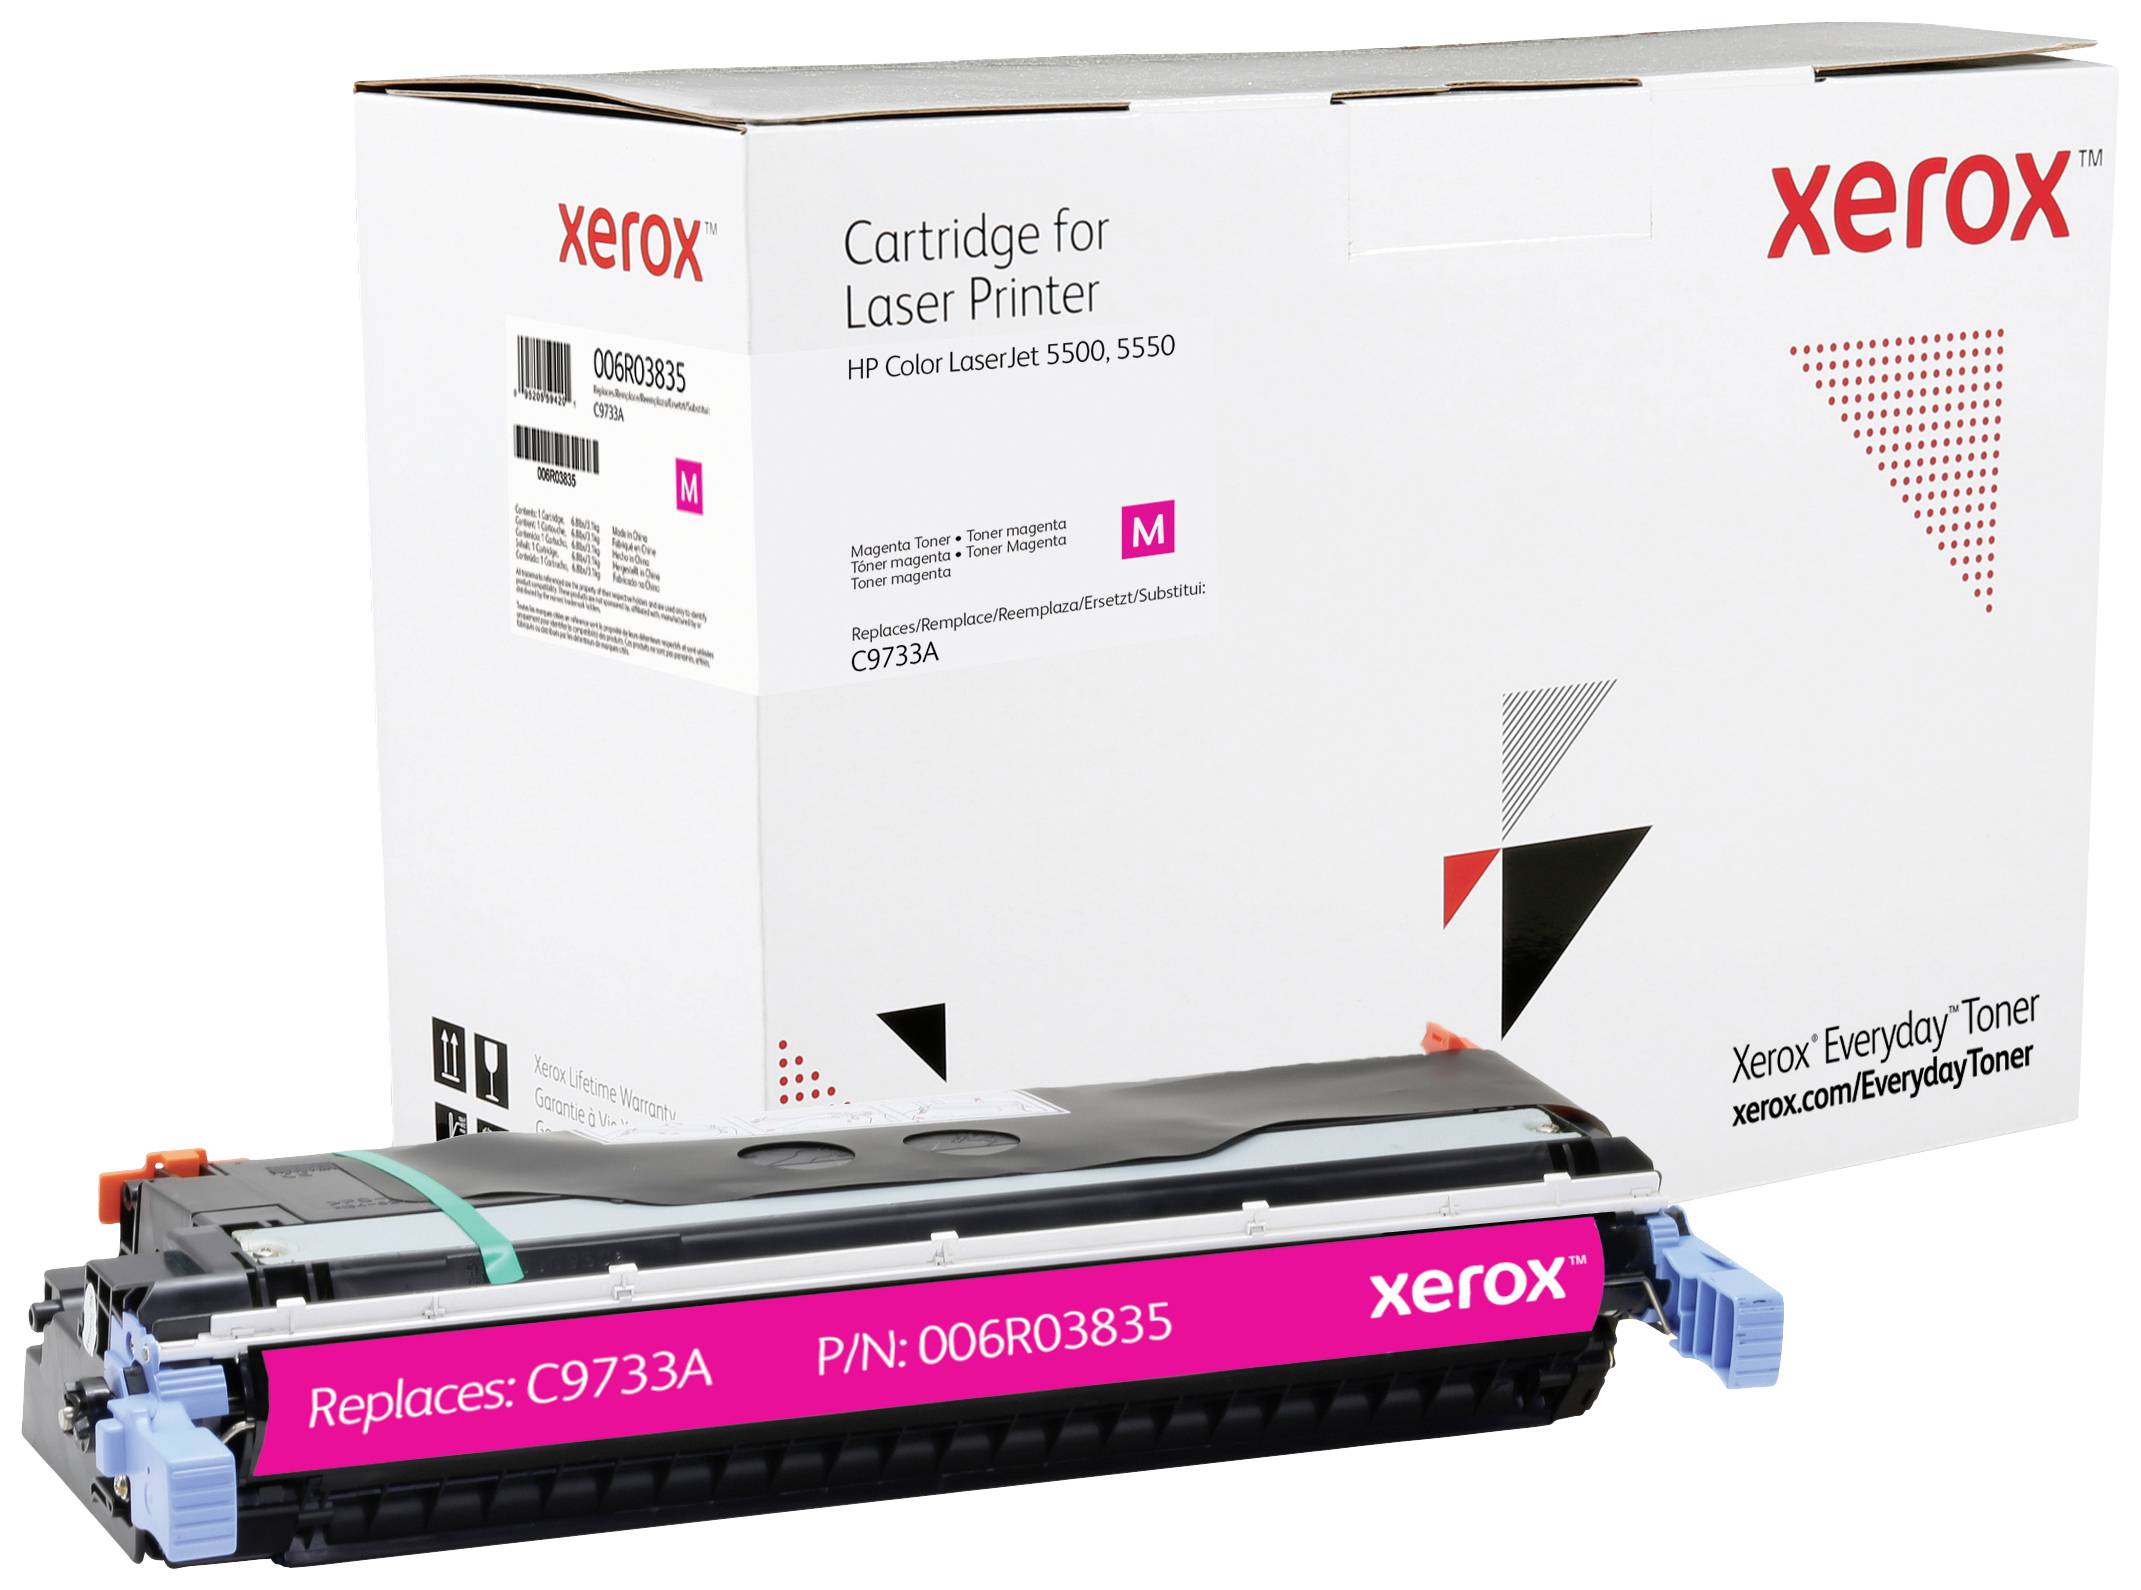 XEROX Everyday - Toner Magenta - ersetzt HP 645A für HP Color LaserJet 5500, 5550